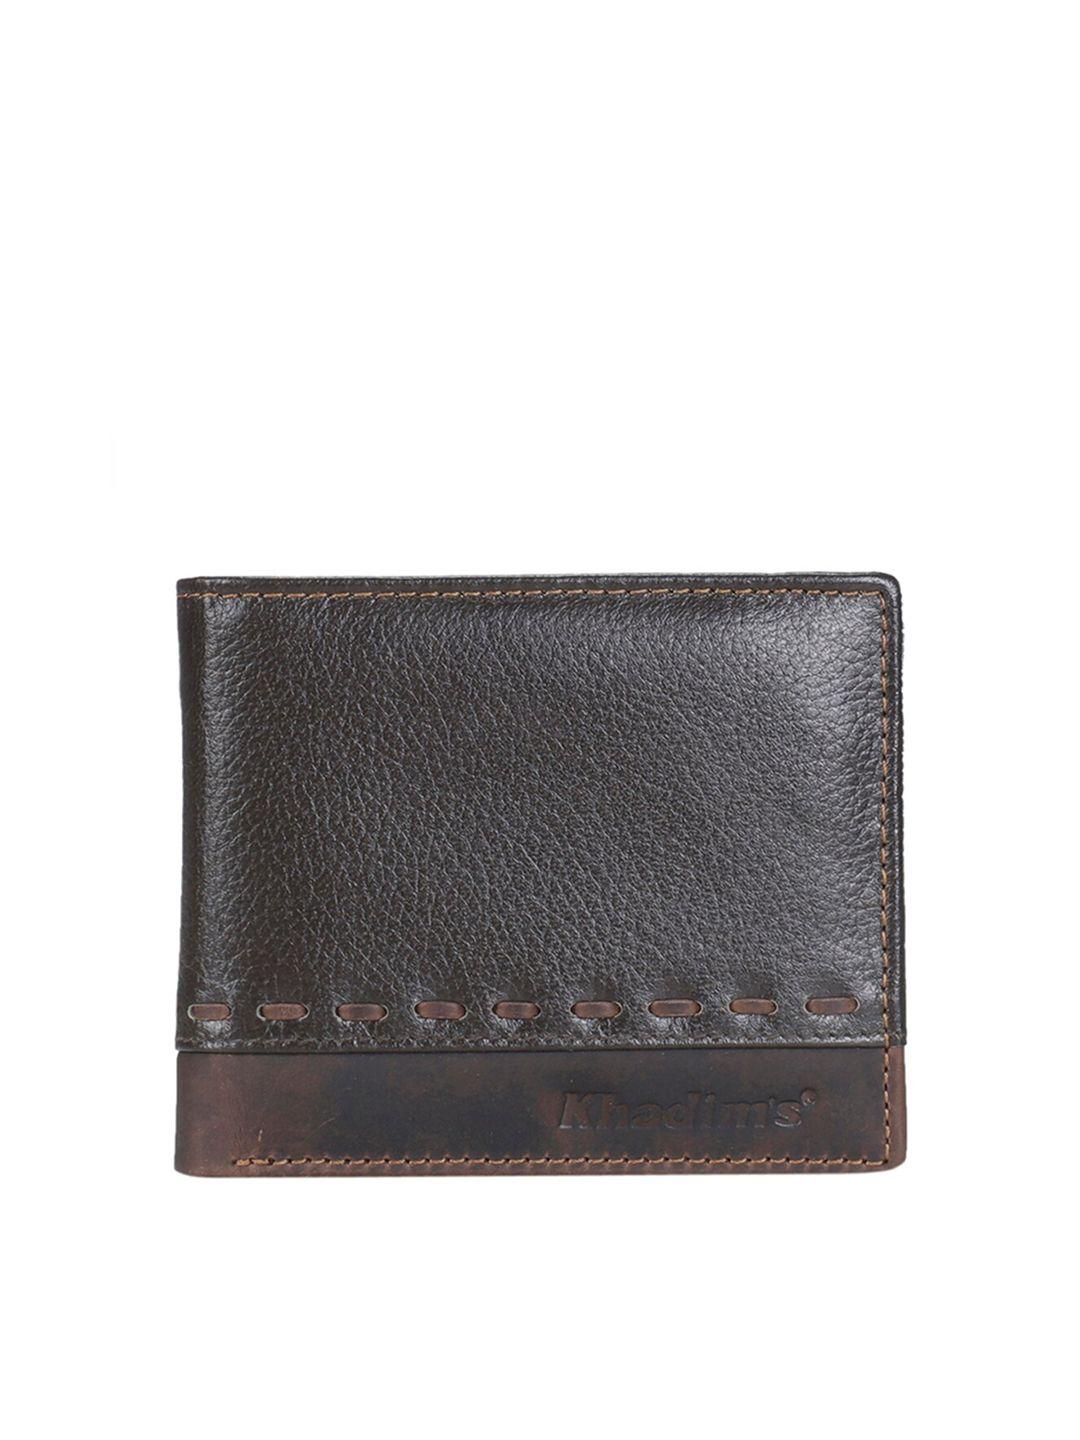 khadims men brown leather card holder